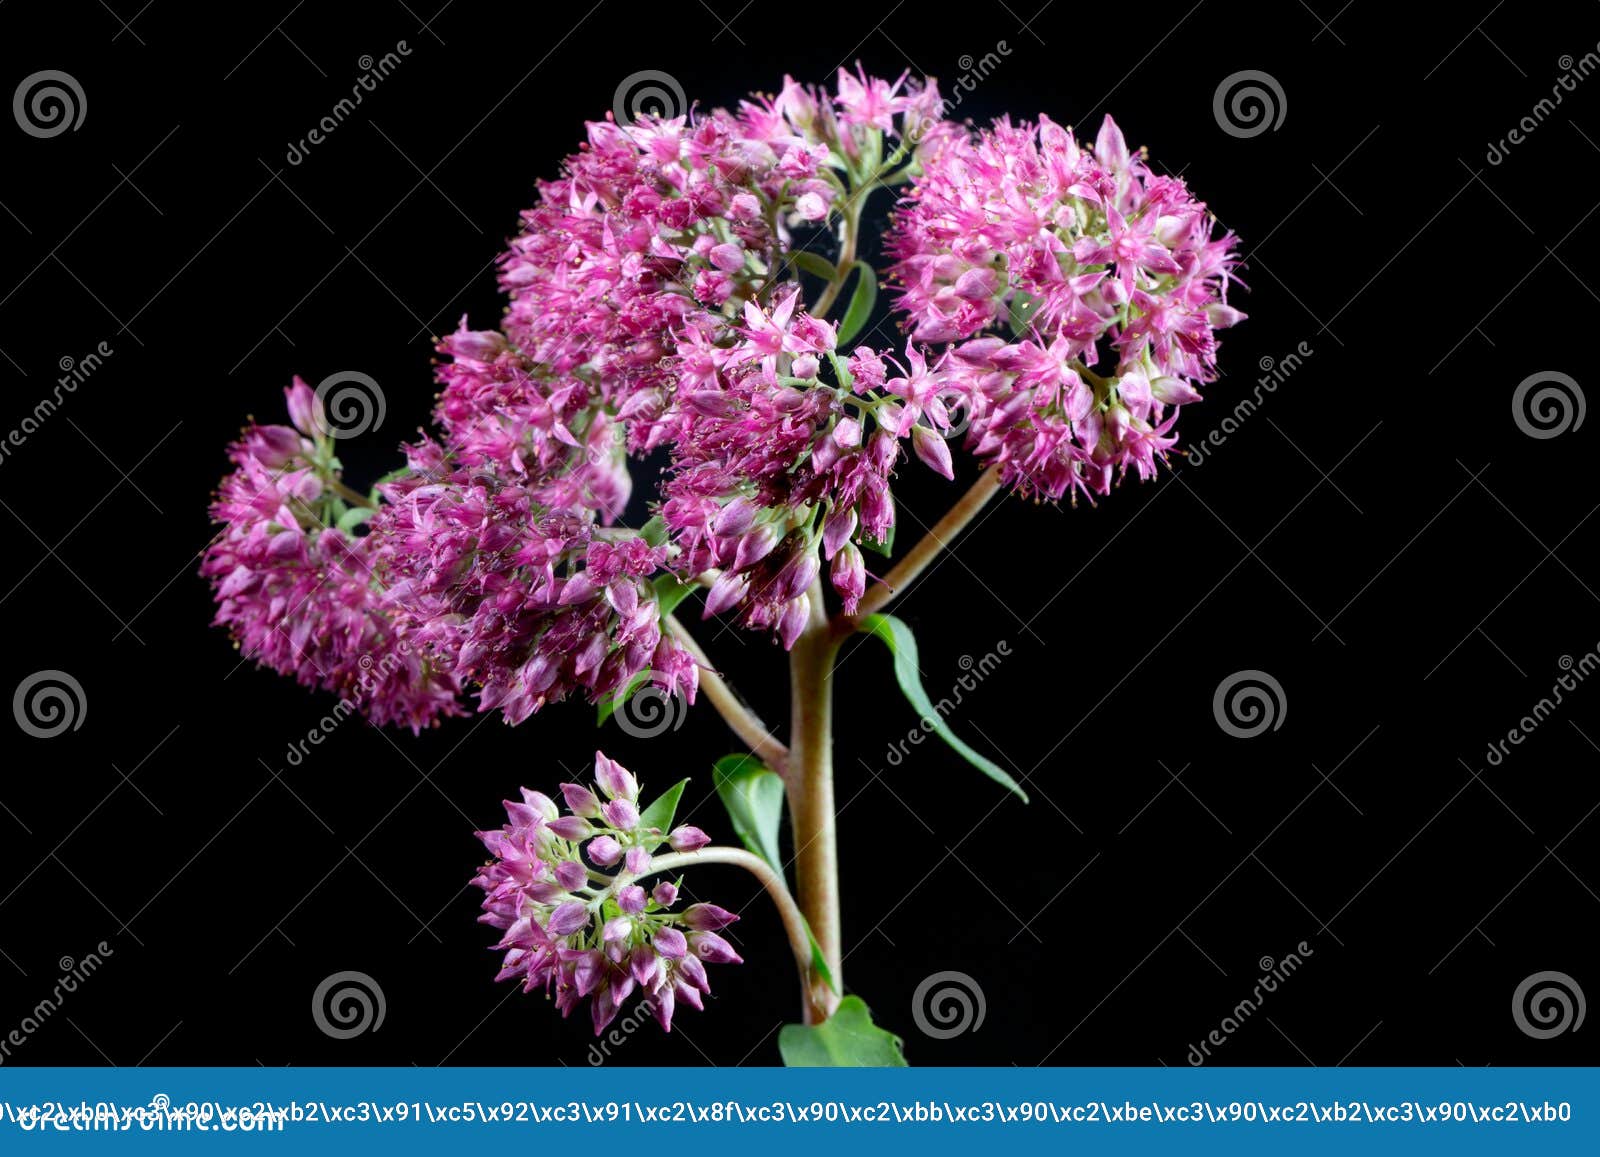 communis purpura ogra sedum hylotelephium in nigro background. a wild flower.